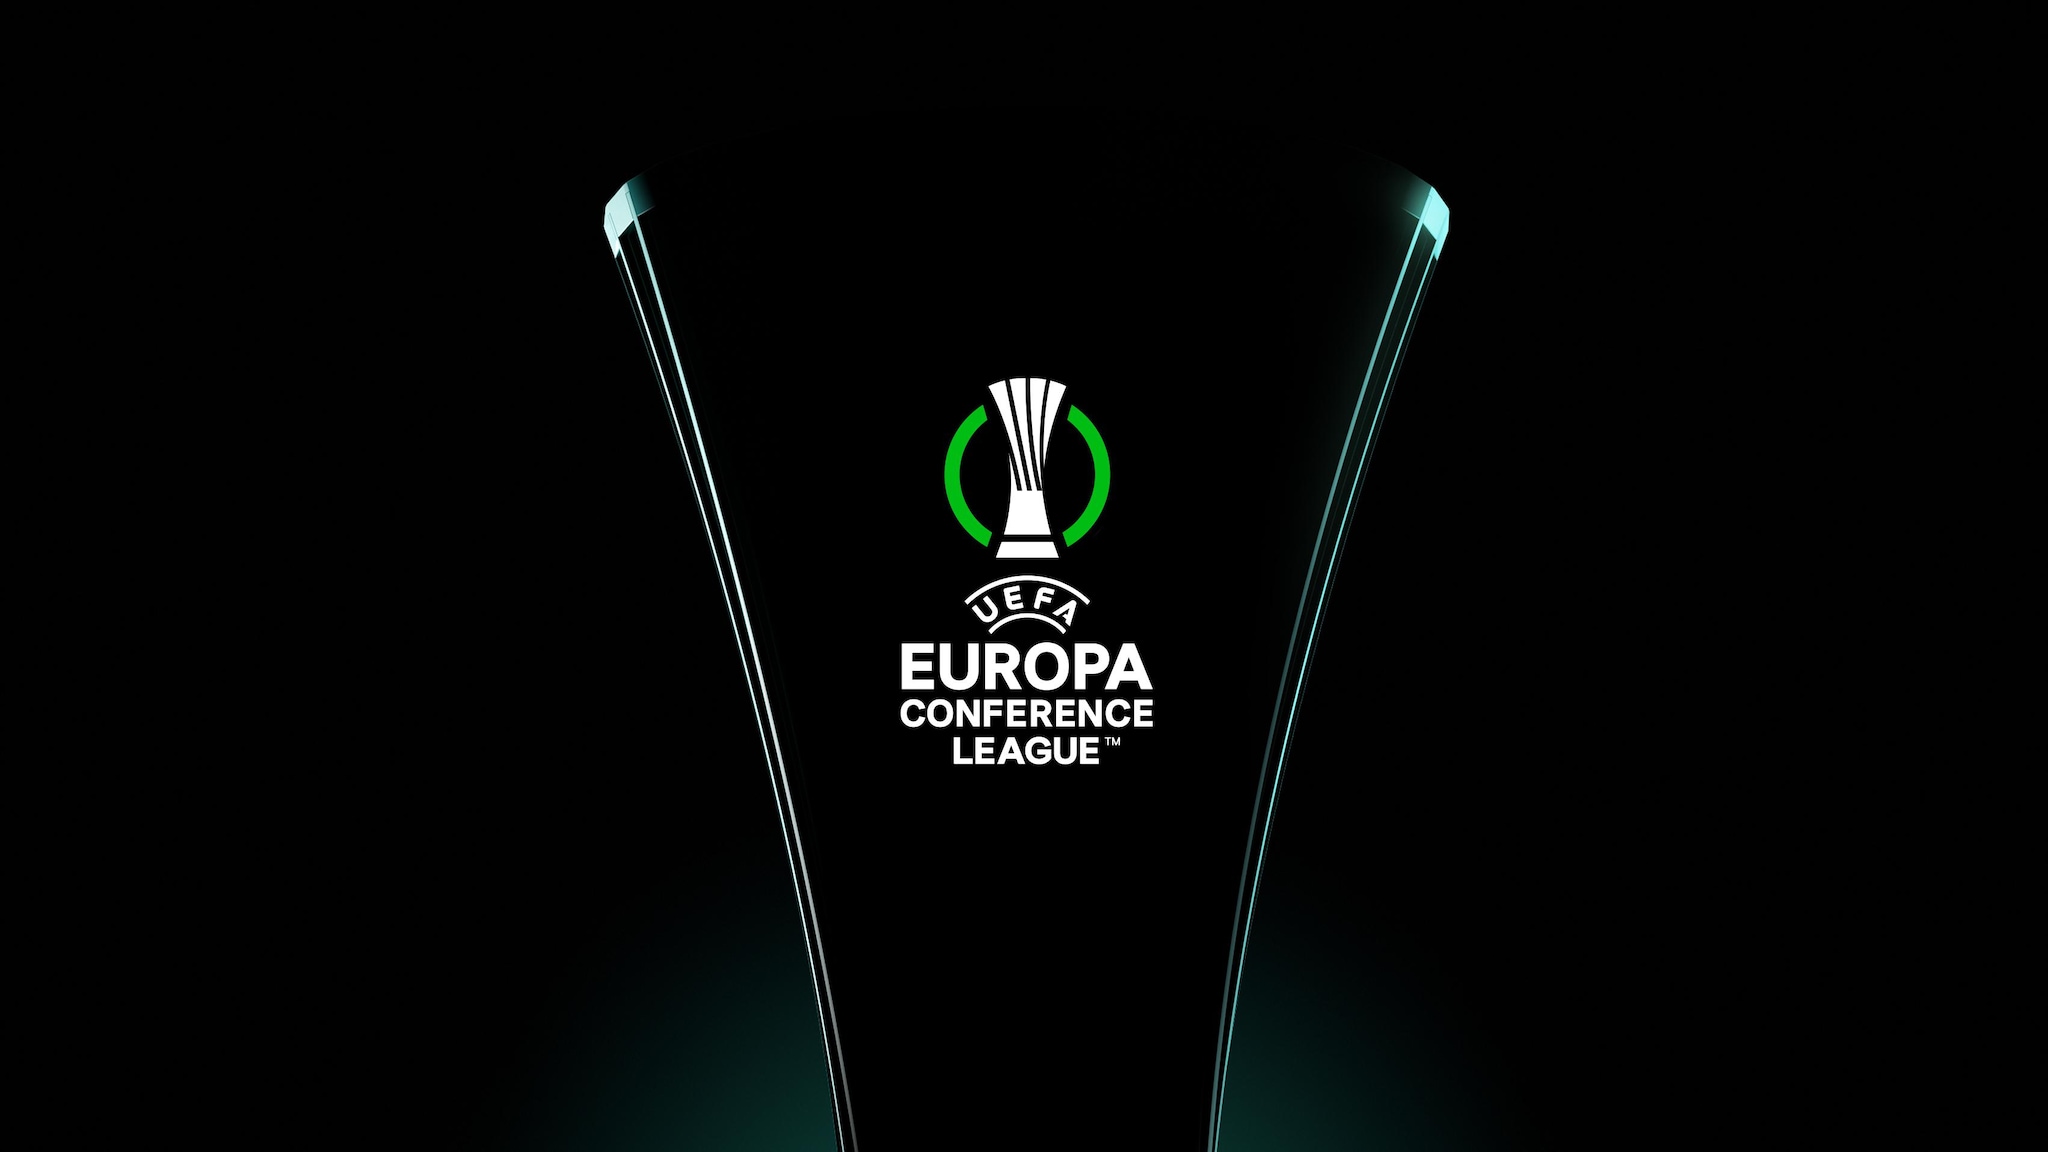 europa conference league - photo #16